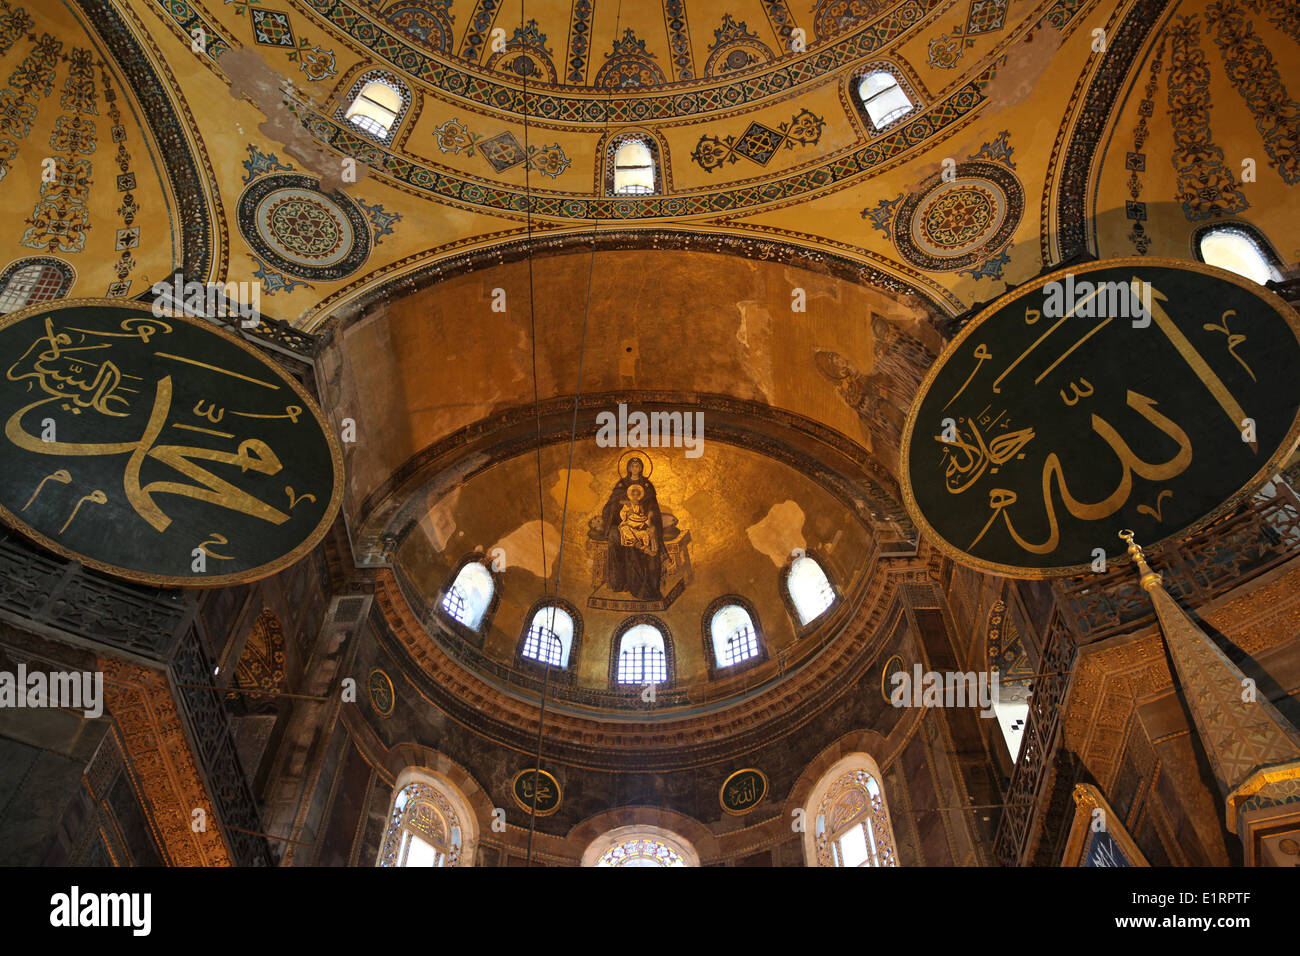 Interior of the Hagia Sophia, also called Aya Sophia, in Istanbul, Turkey Stock Photo